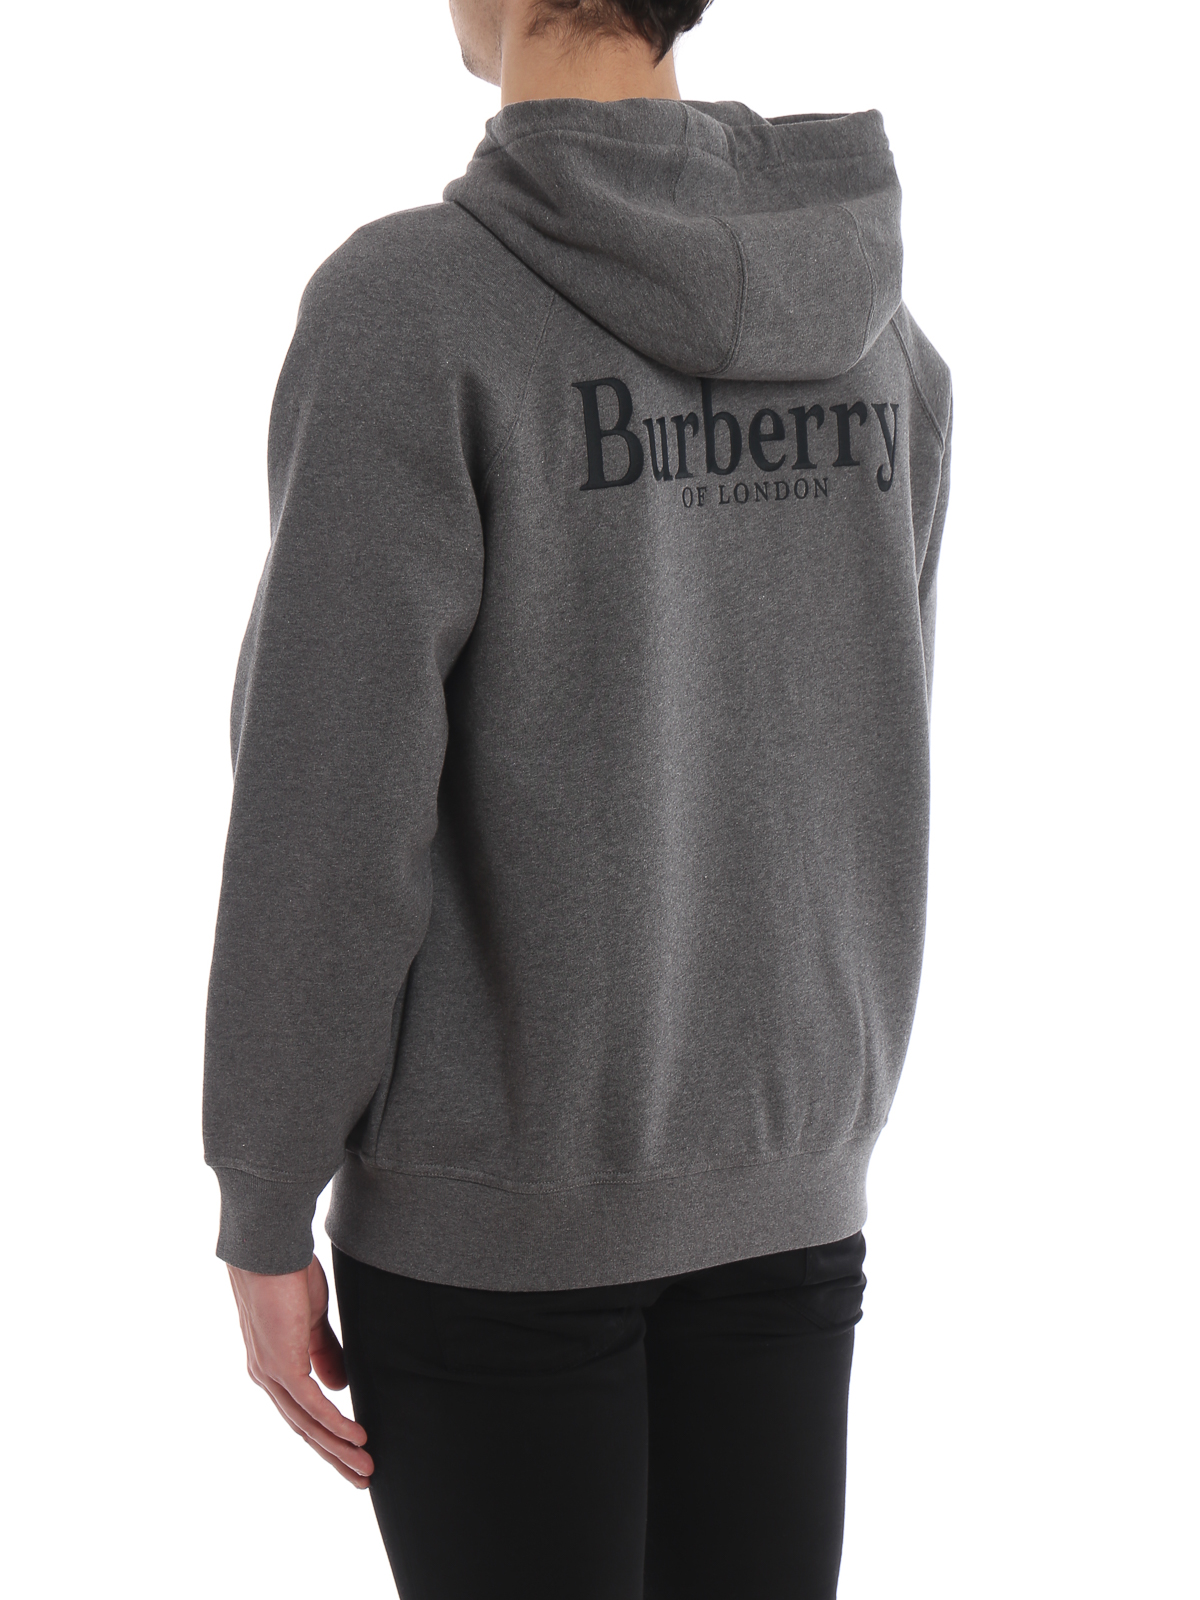 burberry sweatshirt grey